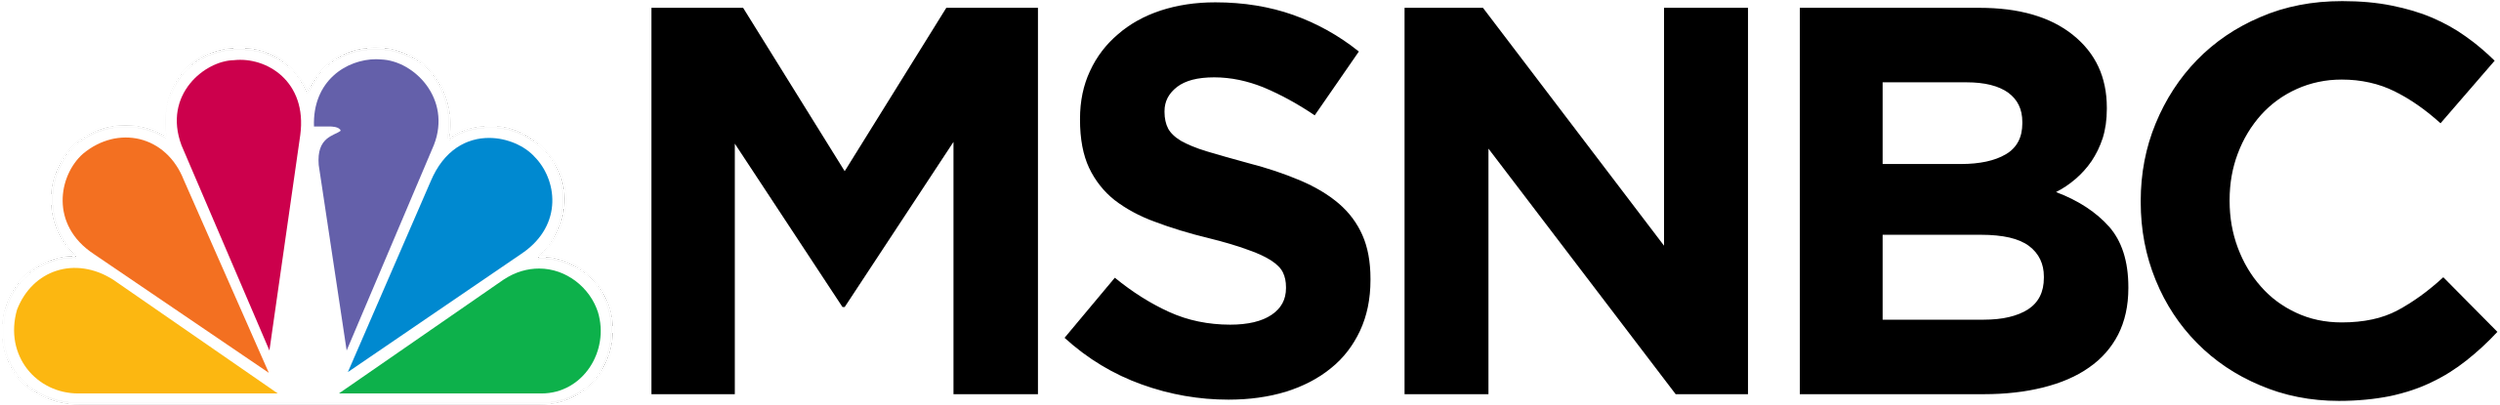 MSNBC_2015-2021_logo.svg.png